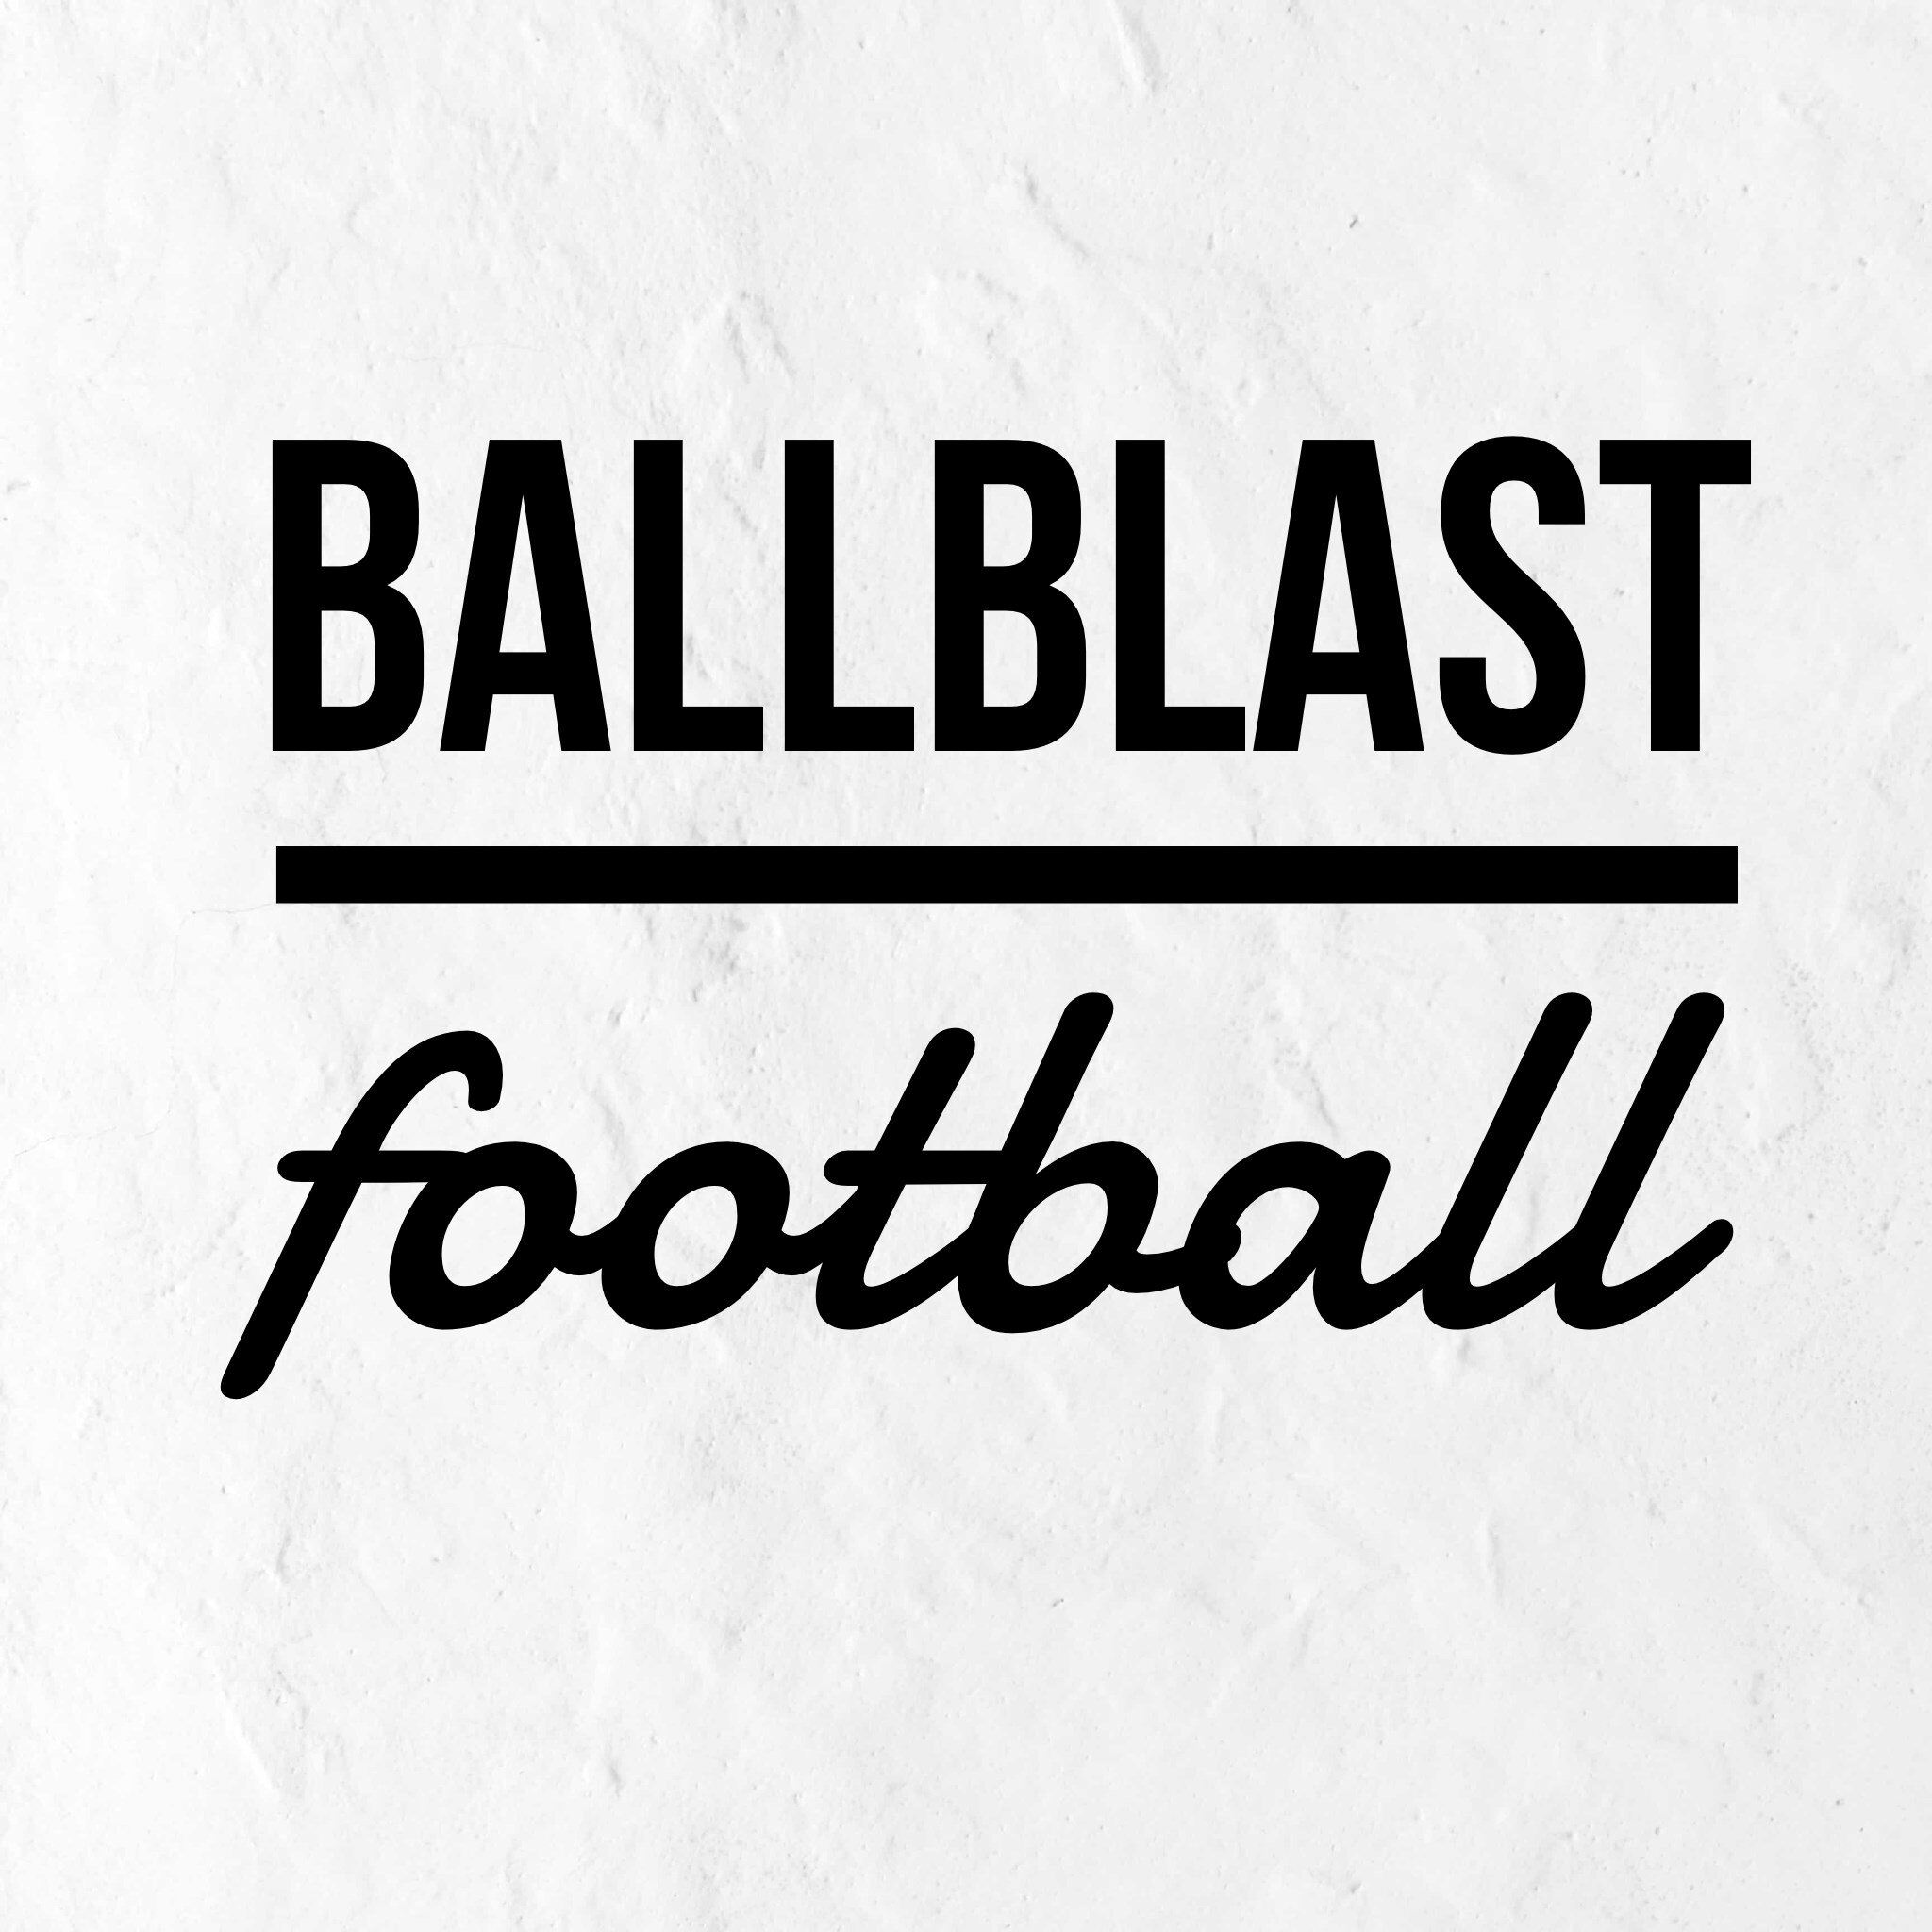 BALLBLAST FOOTBALL NEW.jpg